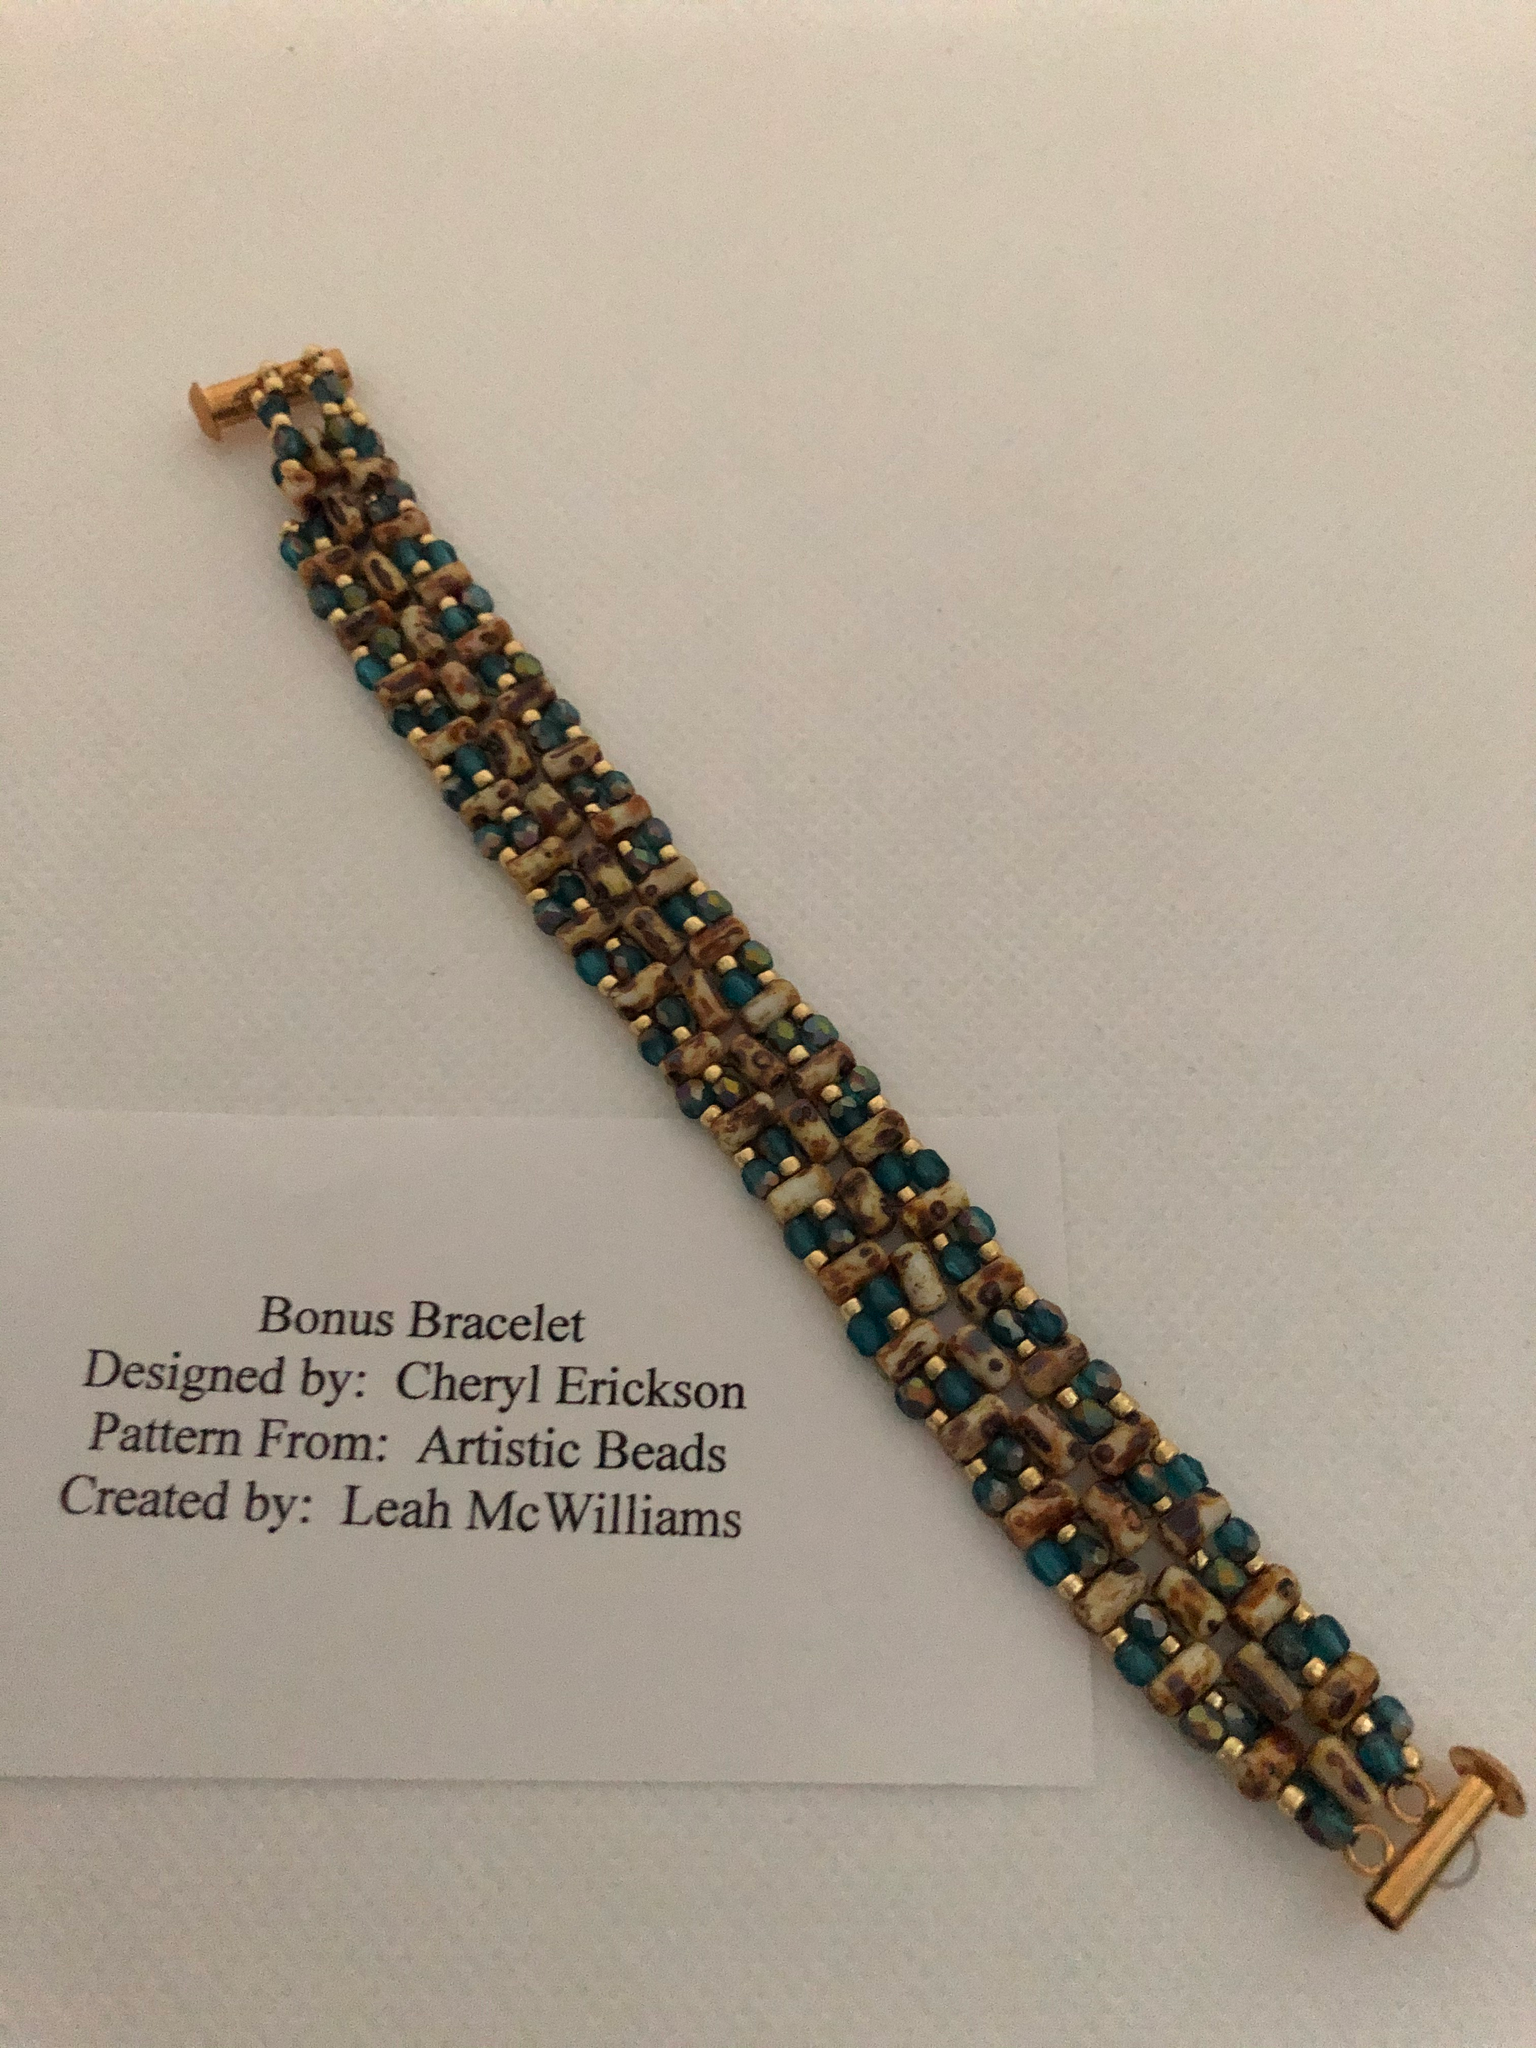 Bonus Bracelet